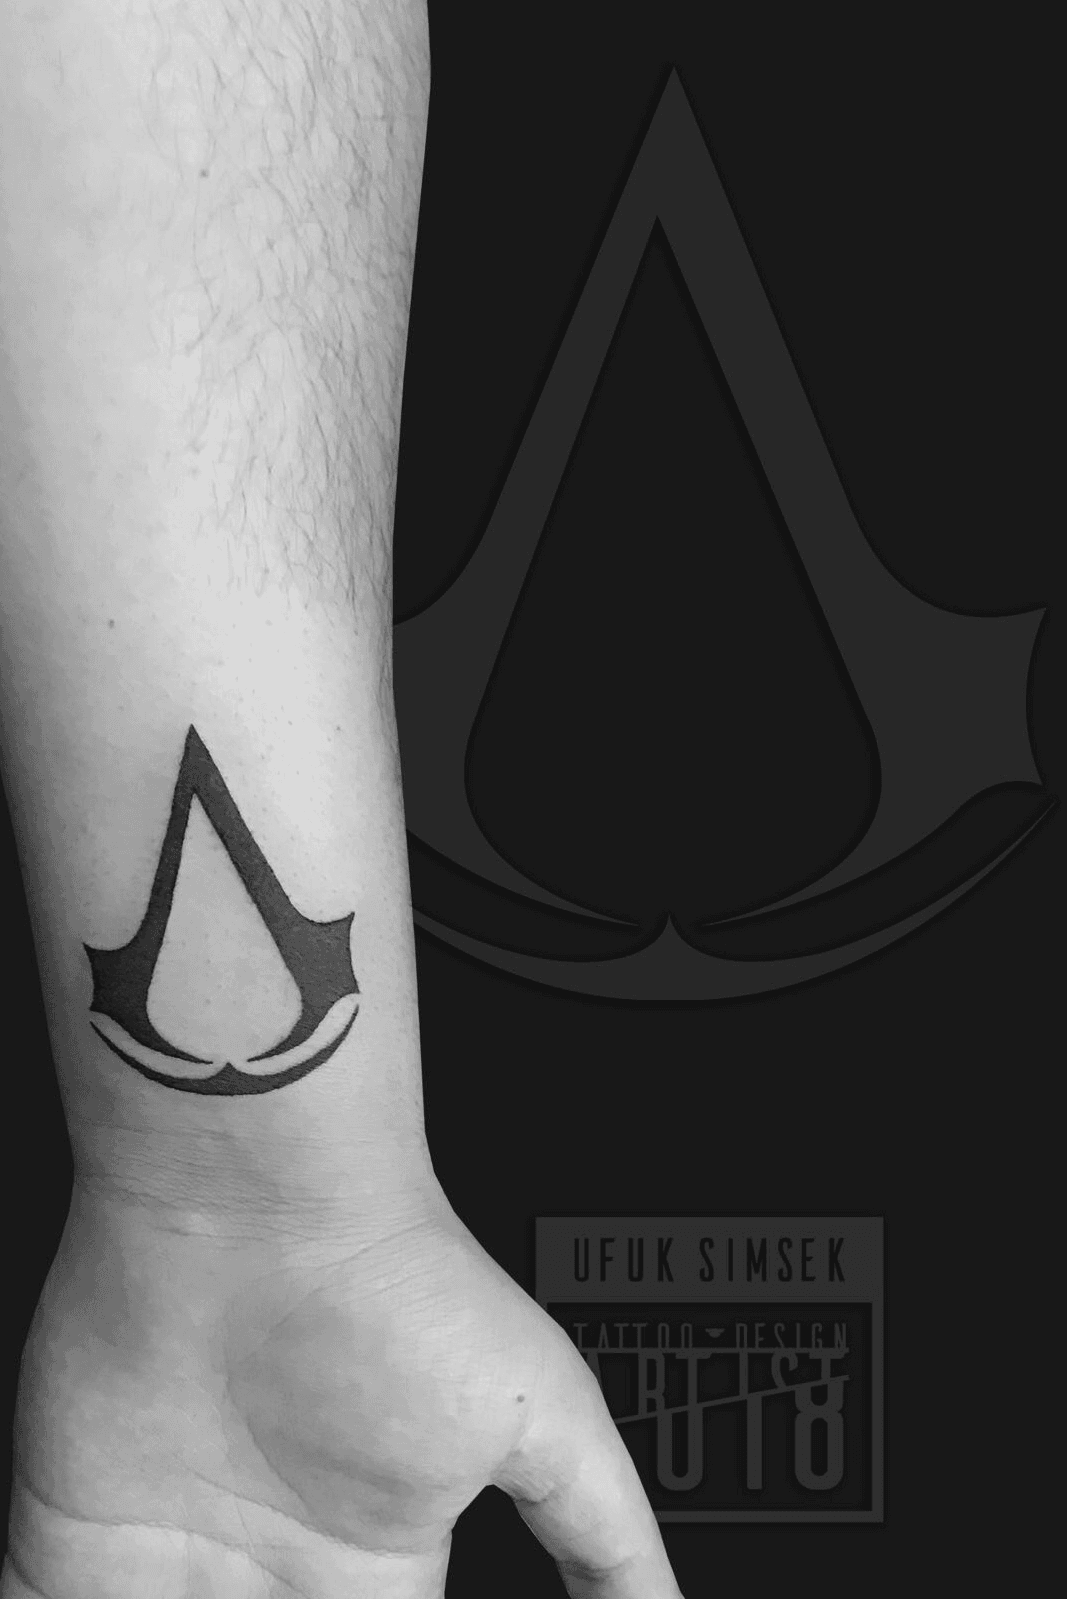 101 Amazing Assassins Creed Tattoo Designs You Need To See  Assassins  creed tattoo Gaming tattoo Gamer tattoos